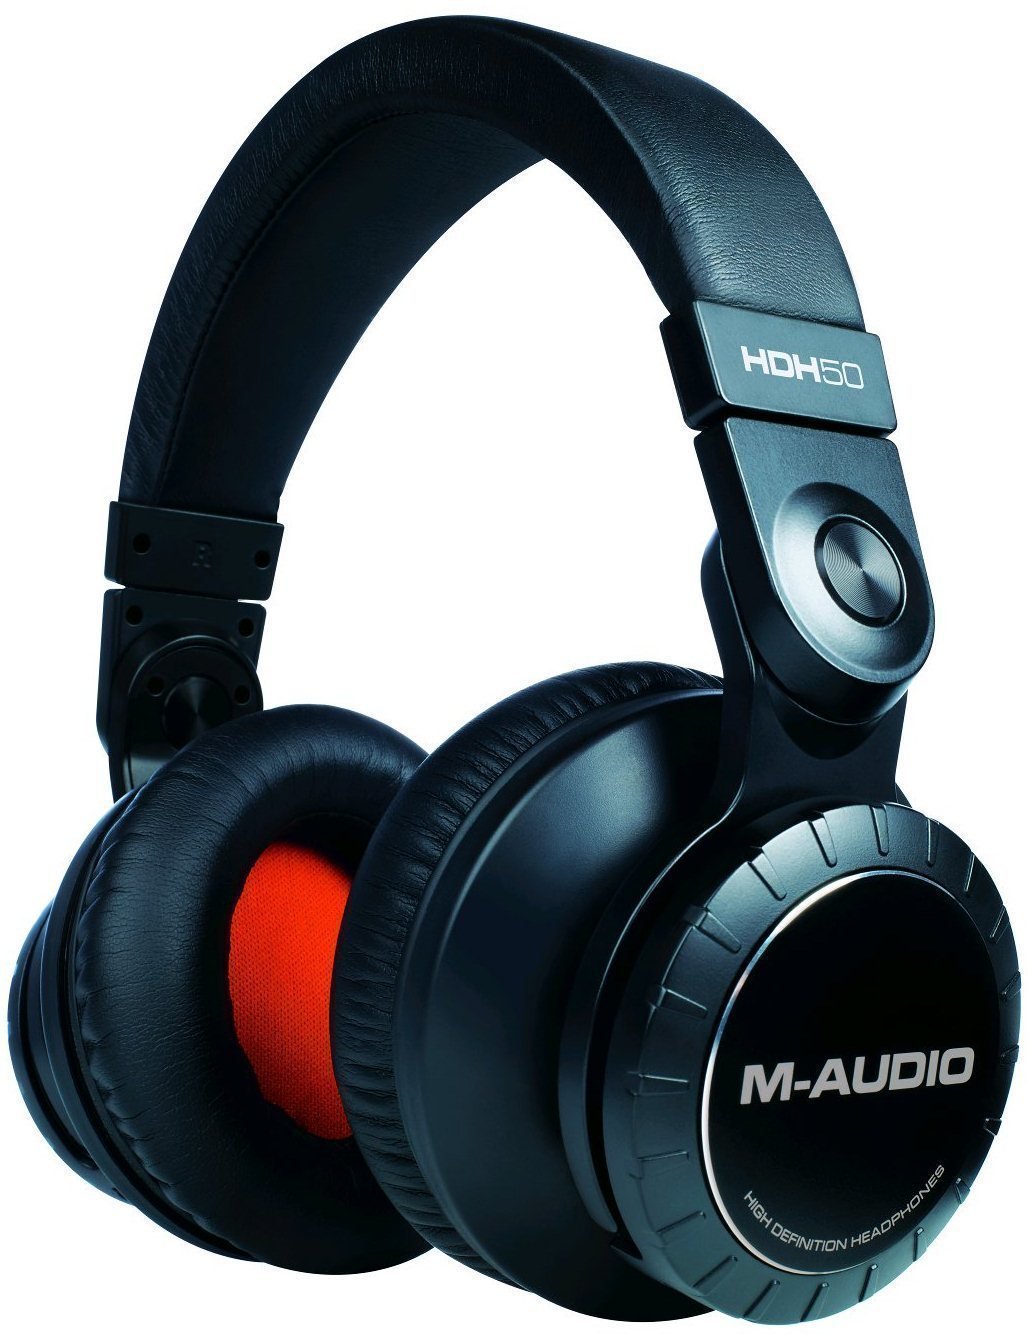 Studio-hovedtelefoner M-Audio HDH50 High Definition Headphones